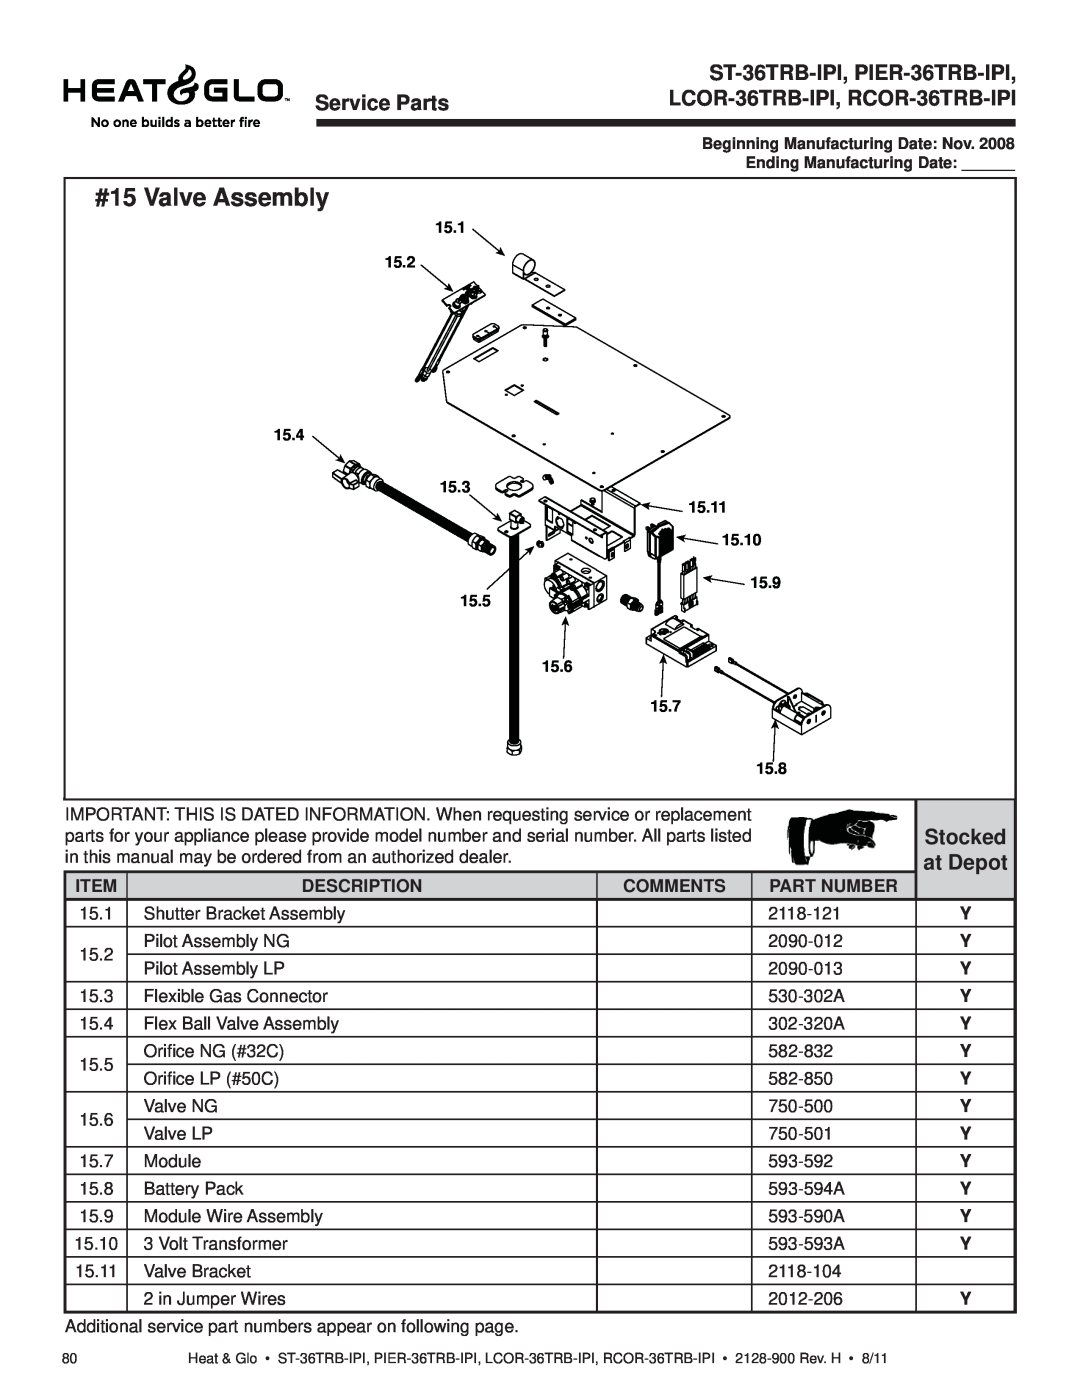 Heat & Glo LifeStyle owner manual #15 Valve Assembly, ST-36TRB-IPI, PIER-36TRB-IPI, Service Parts, Stocked, at Depot 